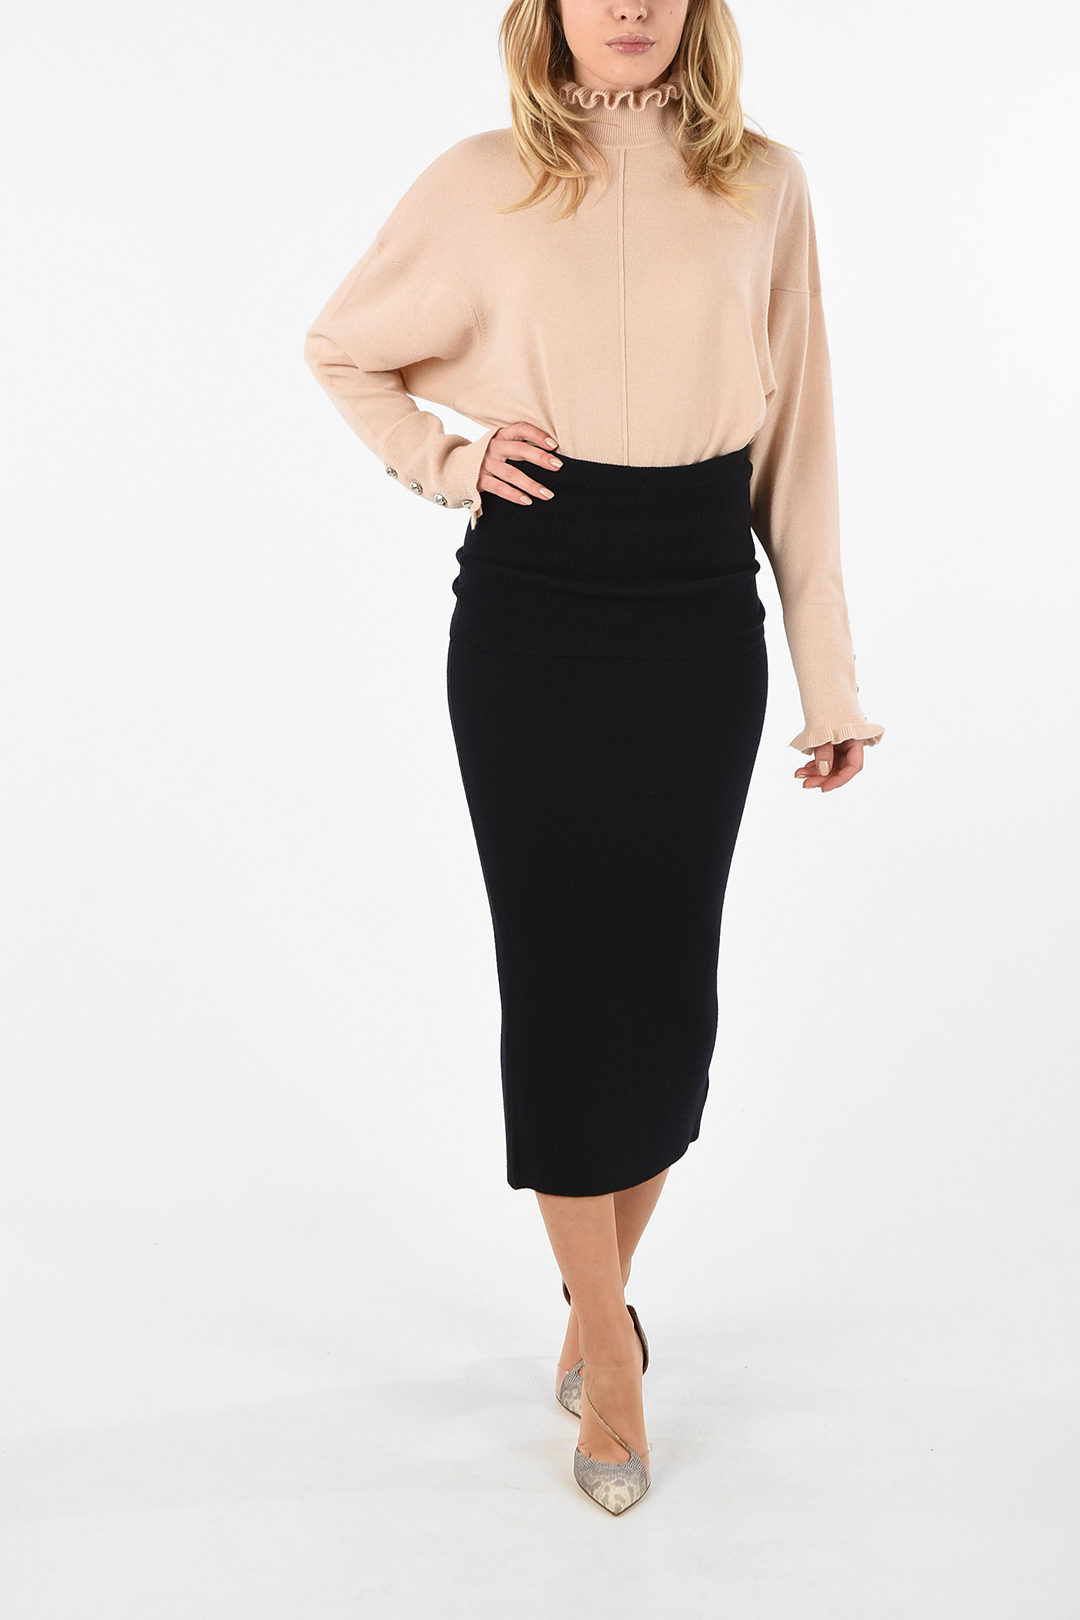 White shirt, black pencil skirt, black tights and maroon high heels -  Fashion Tights